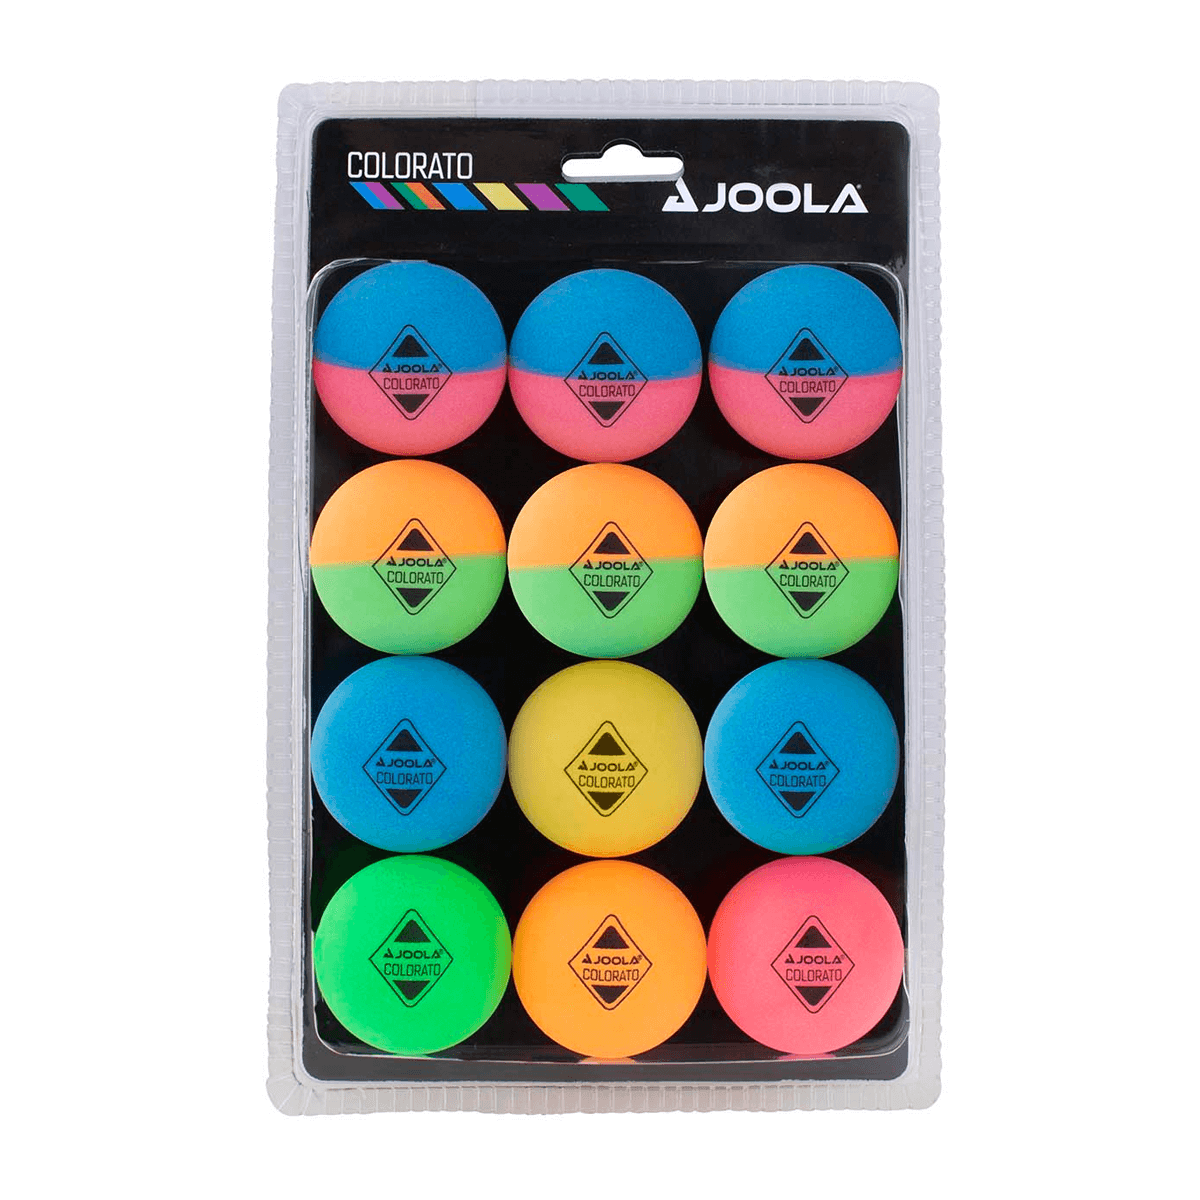 JOOLA Colorato Table Tennis Balls (12 Pack)